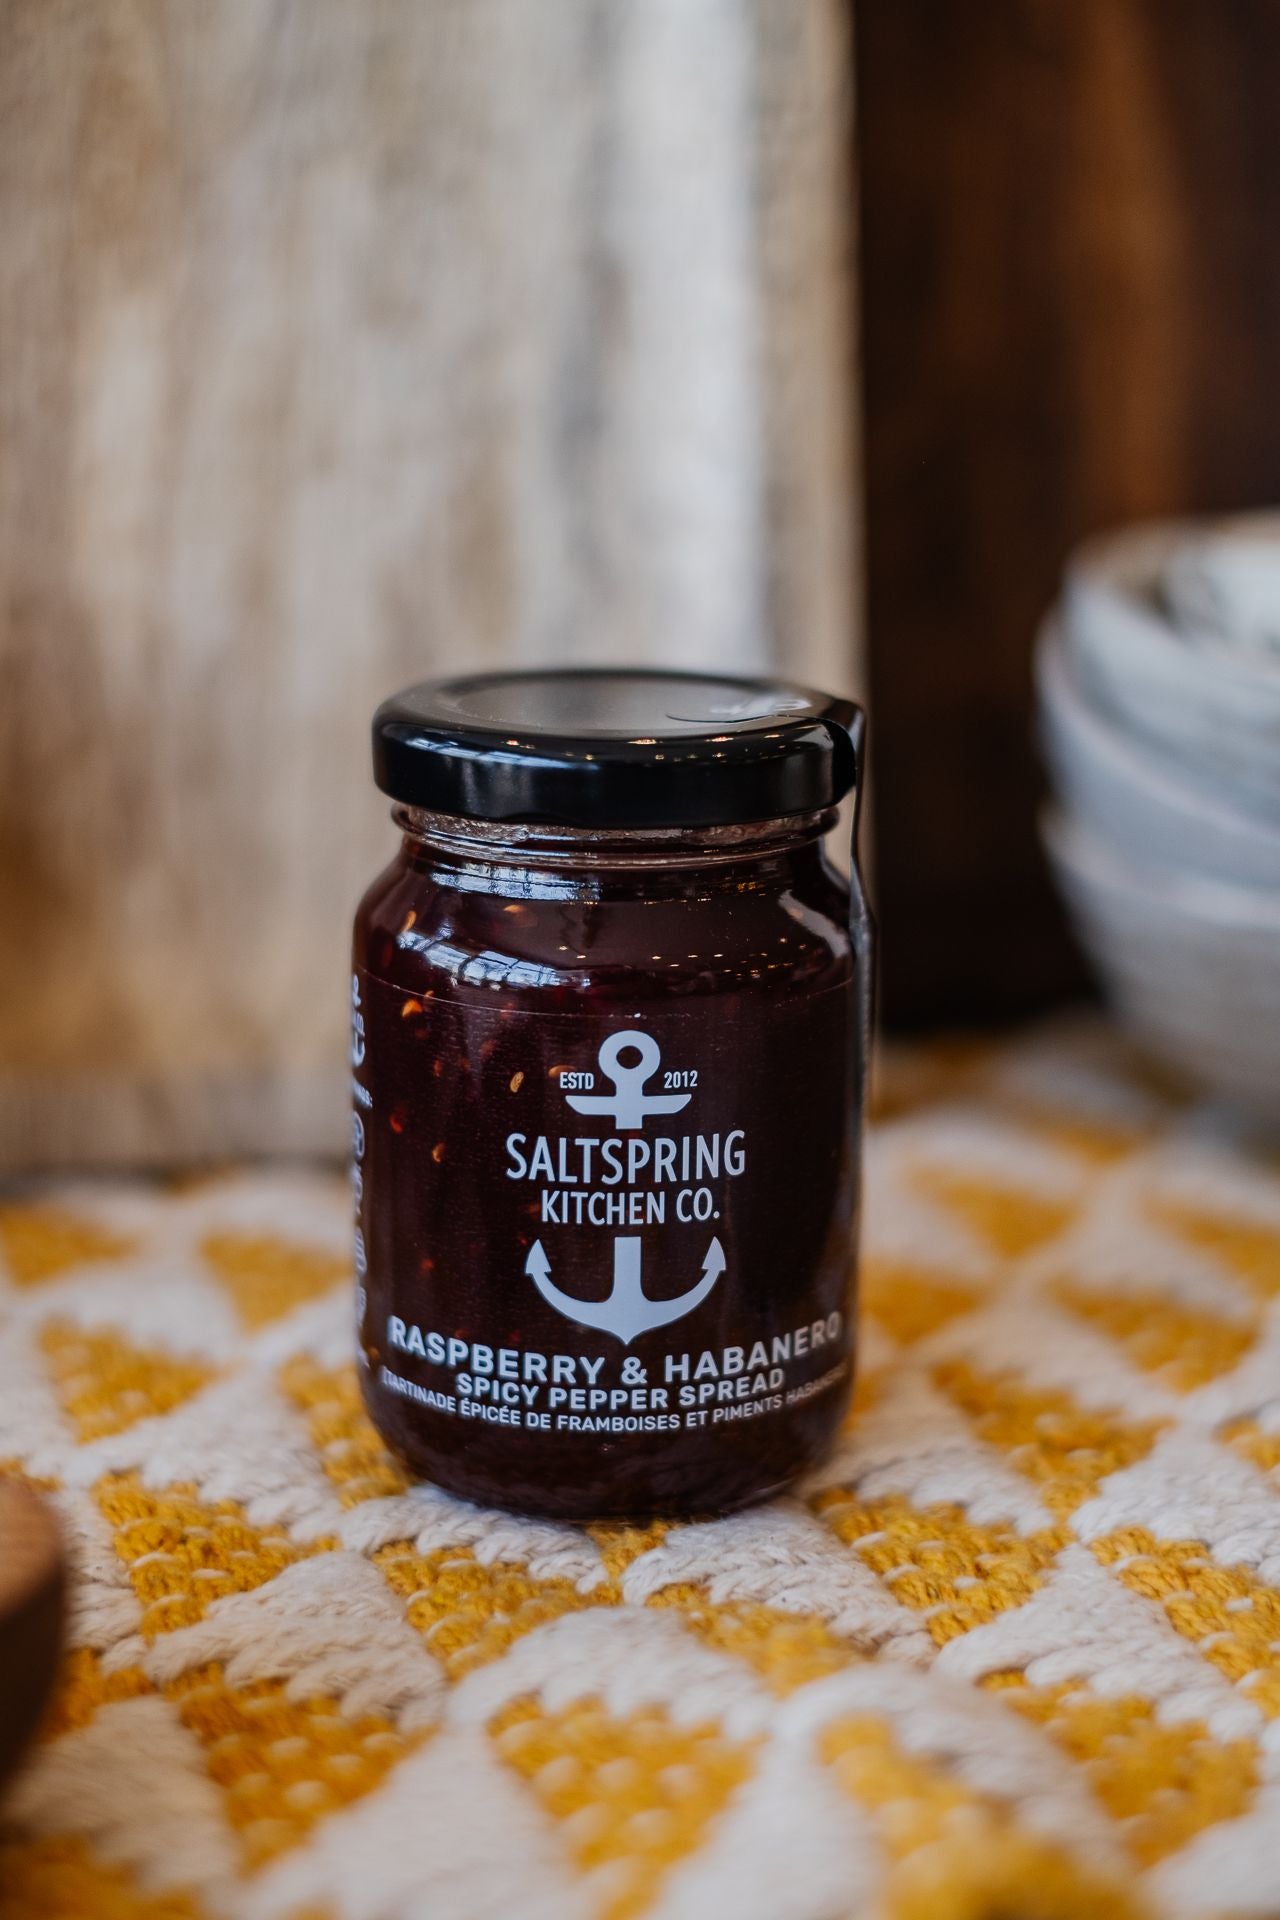 Saltspring Raspberry Habanero Spicy Pepper Spread